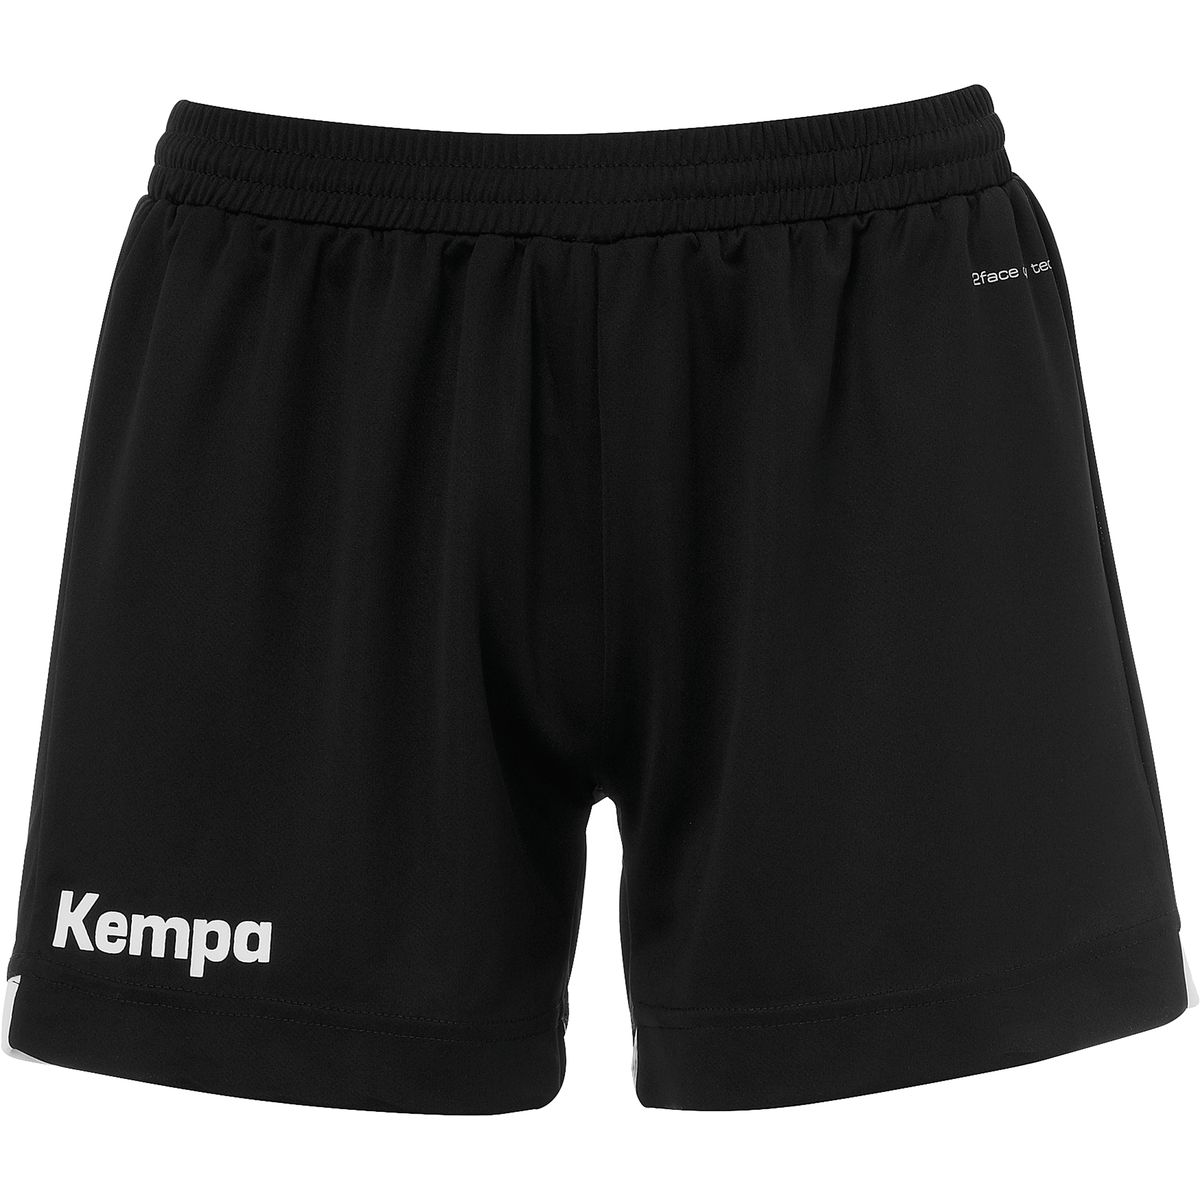 Kempa Player Damen Shorts